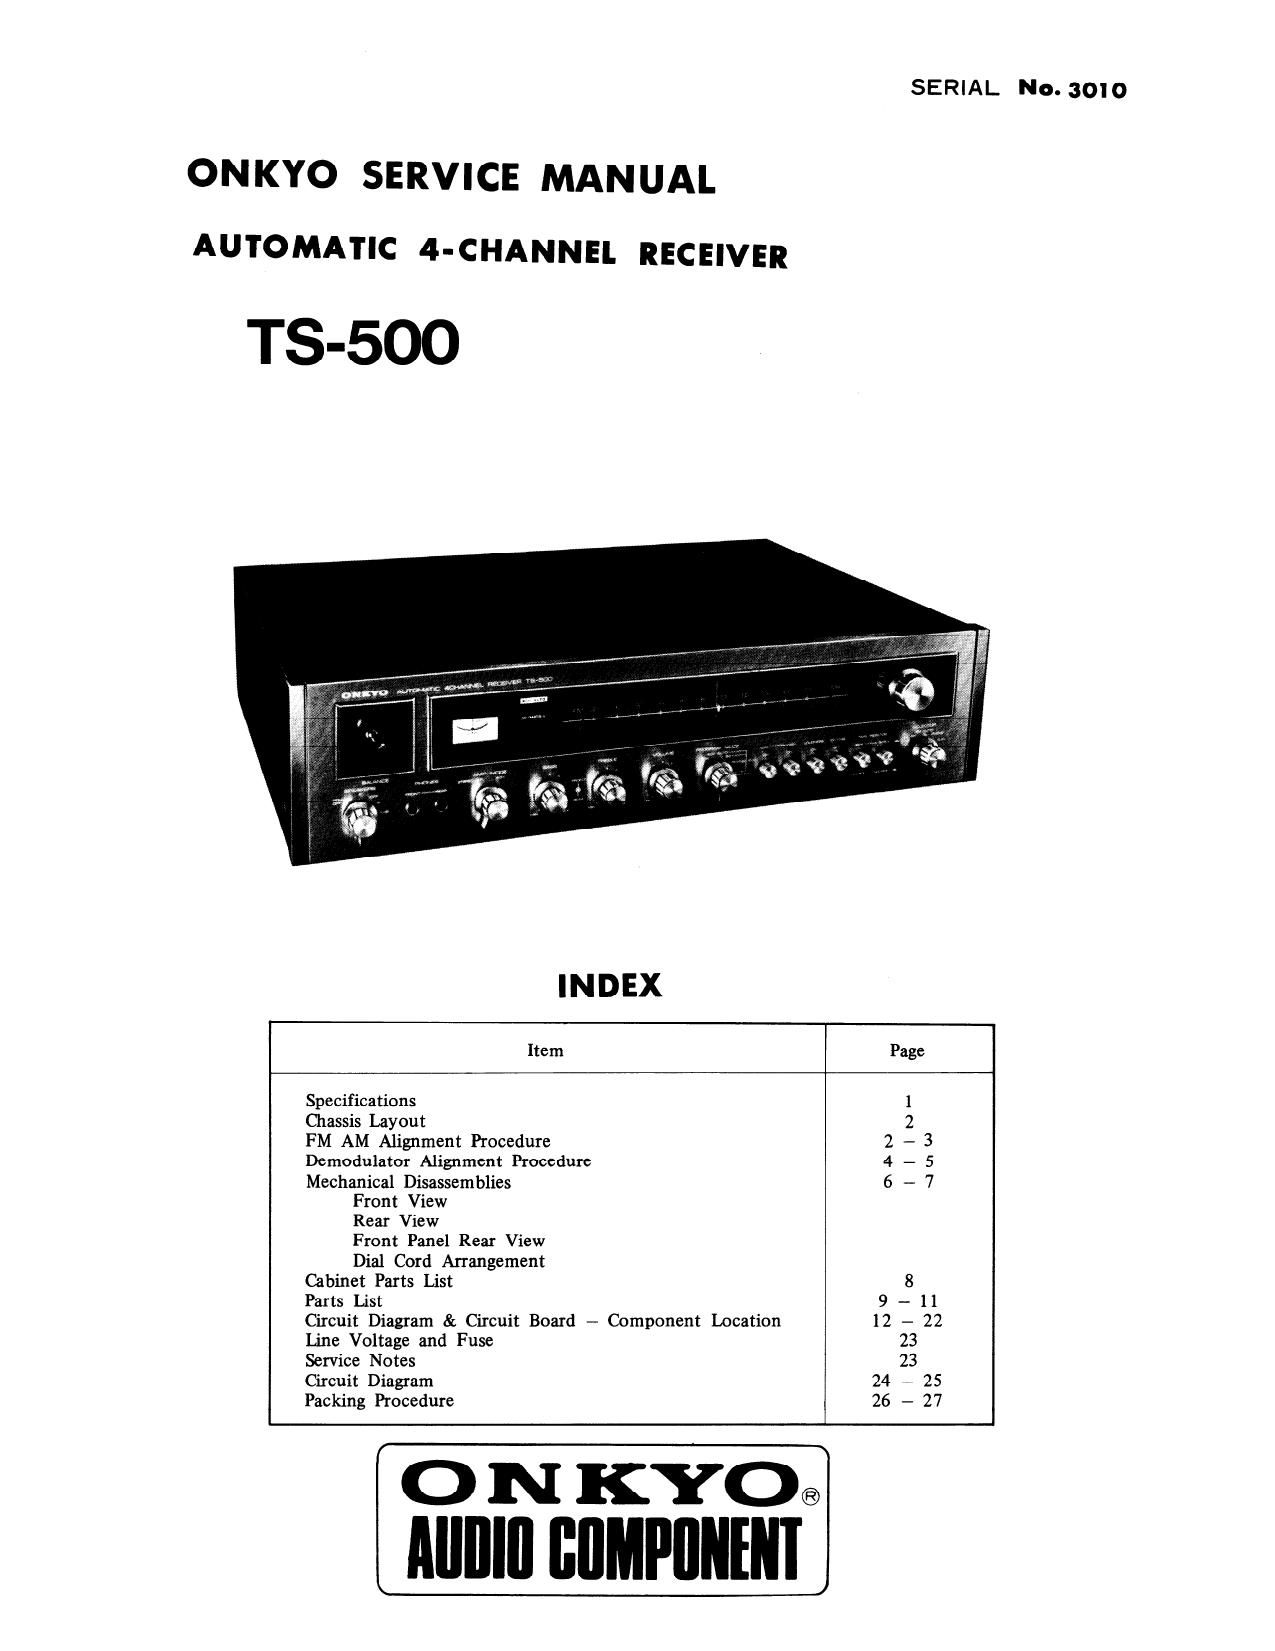 Onkyo TS 500 Service Manual